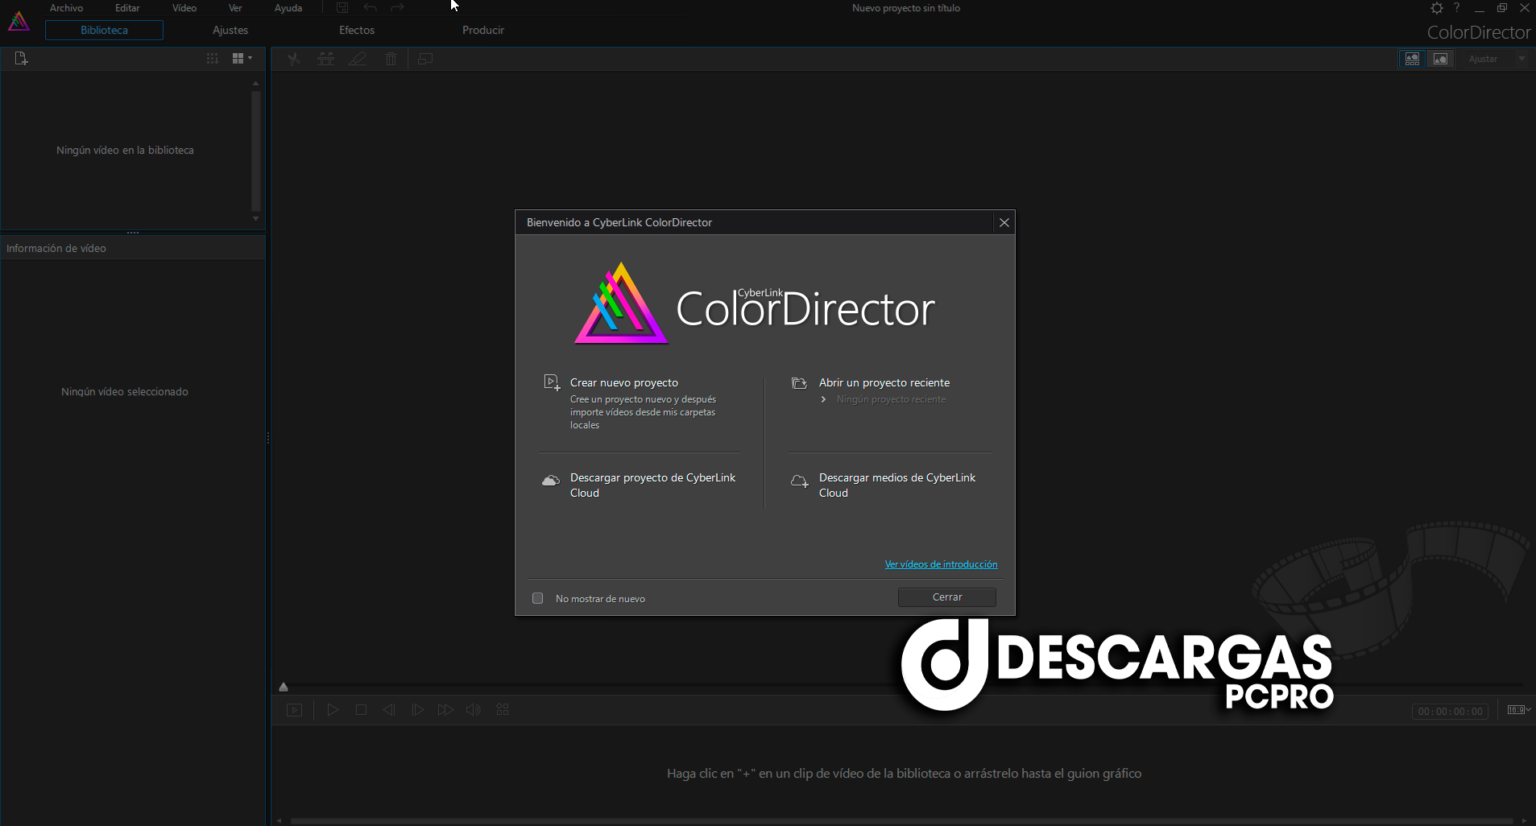 instal Cyberlink ColorDirector Ultra 11.6.3020.0 free